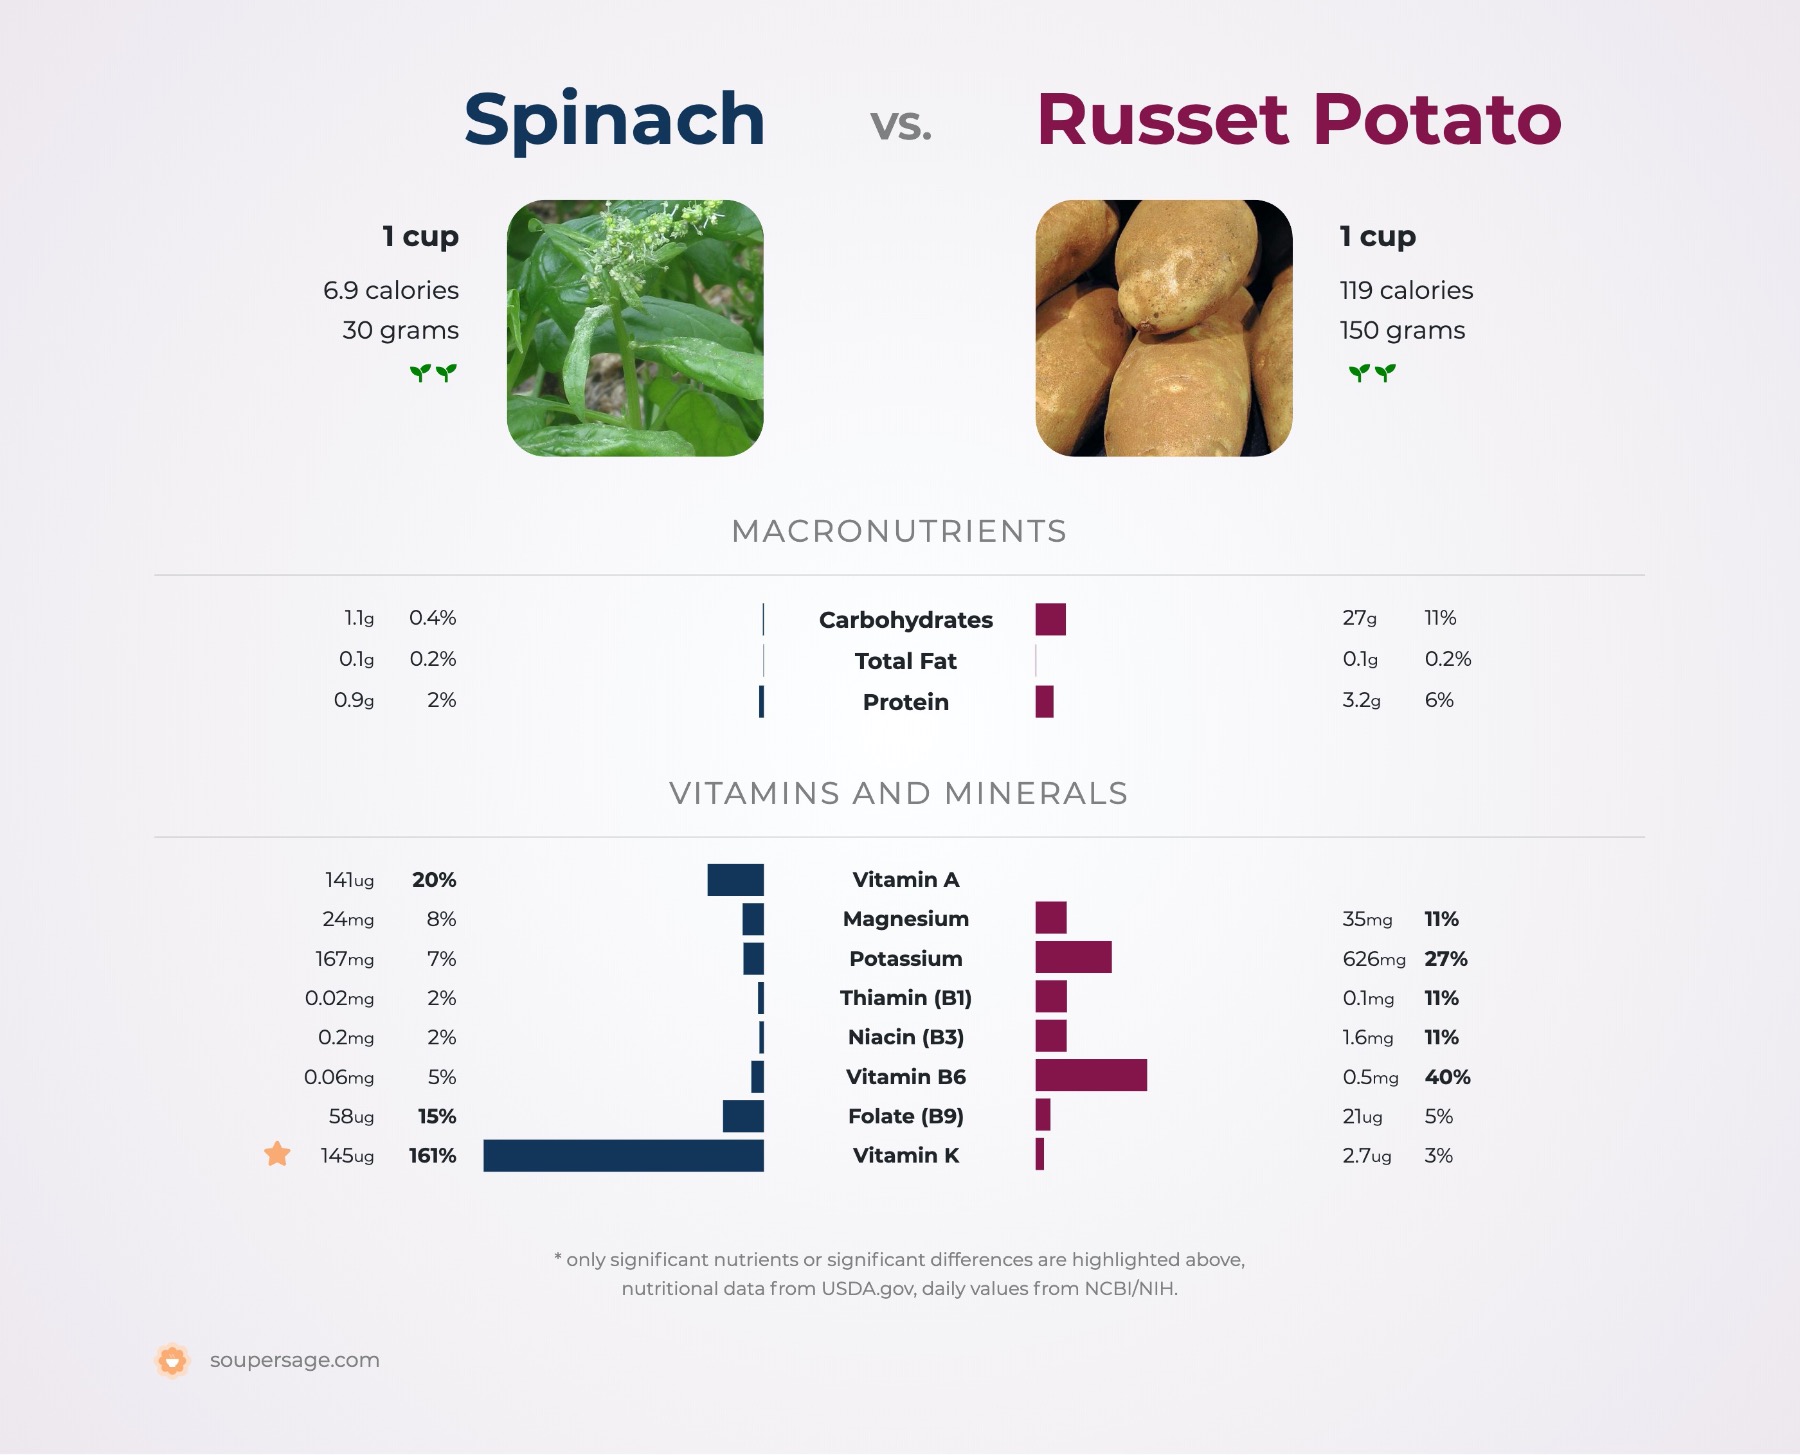 nutrition comparison of russet potato vs. spinach